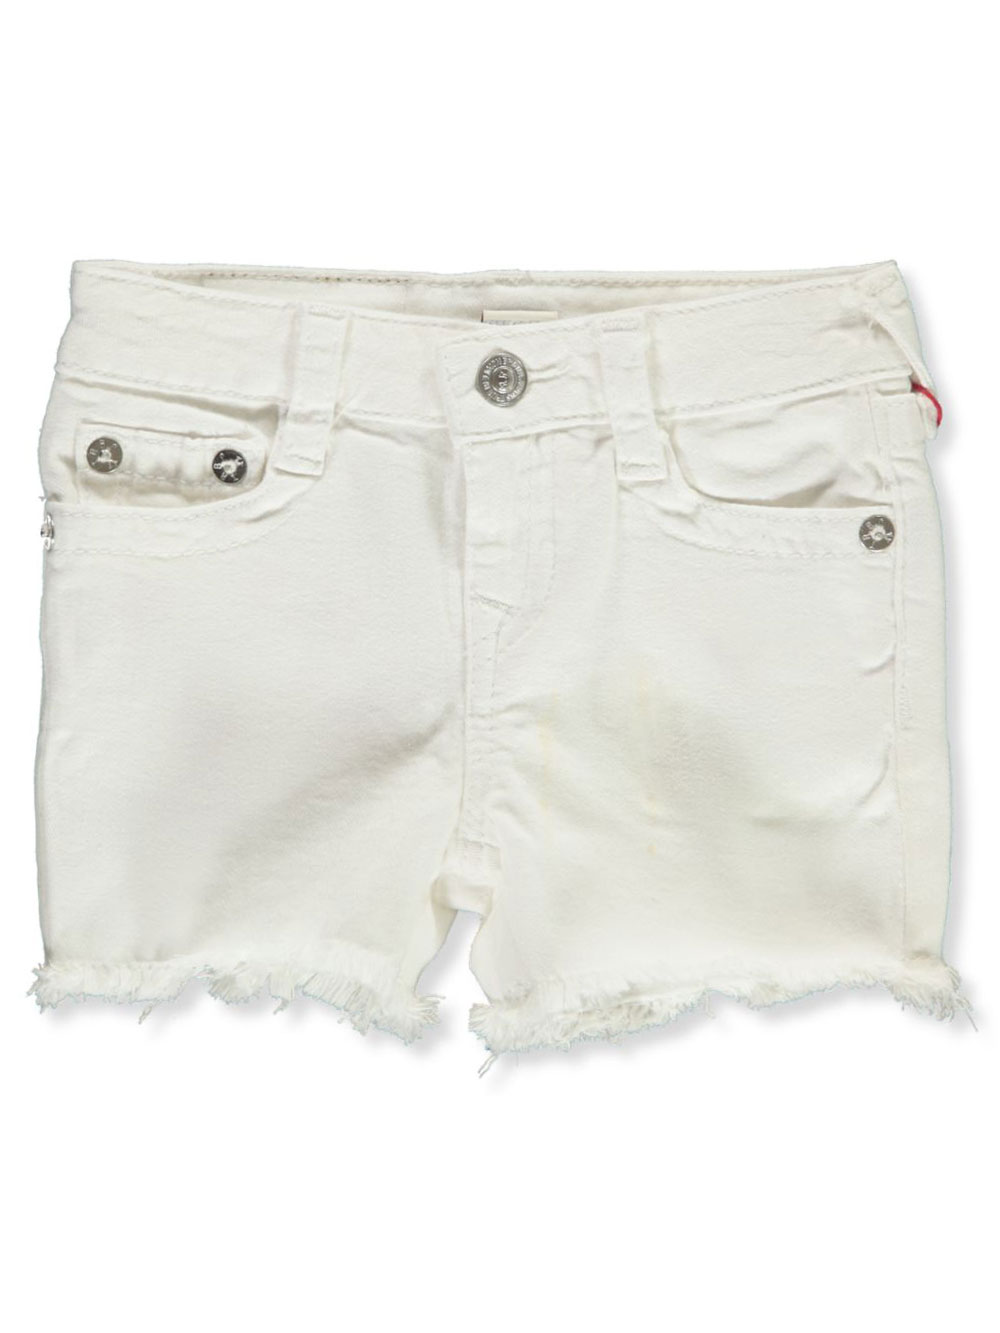 white true religion shorts